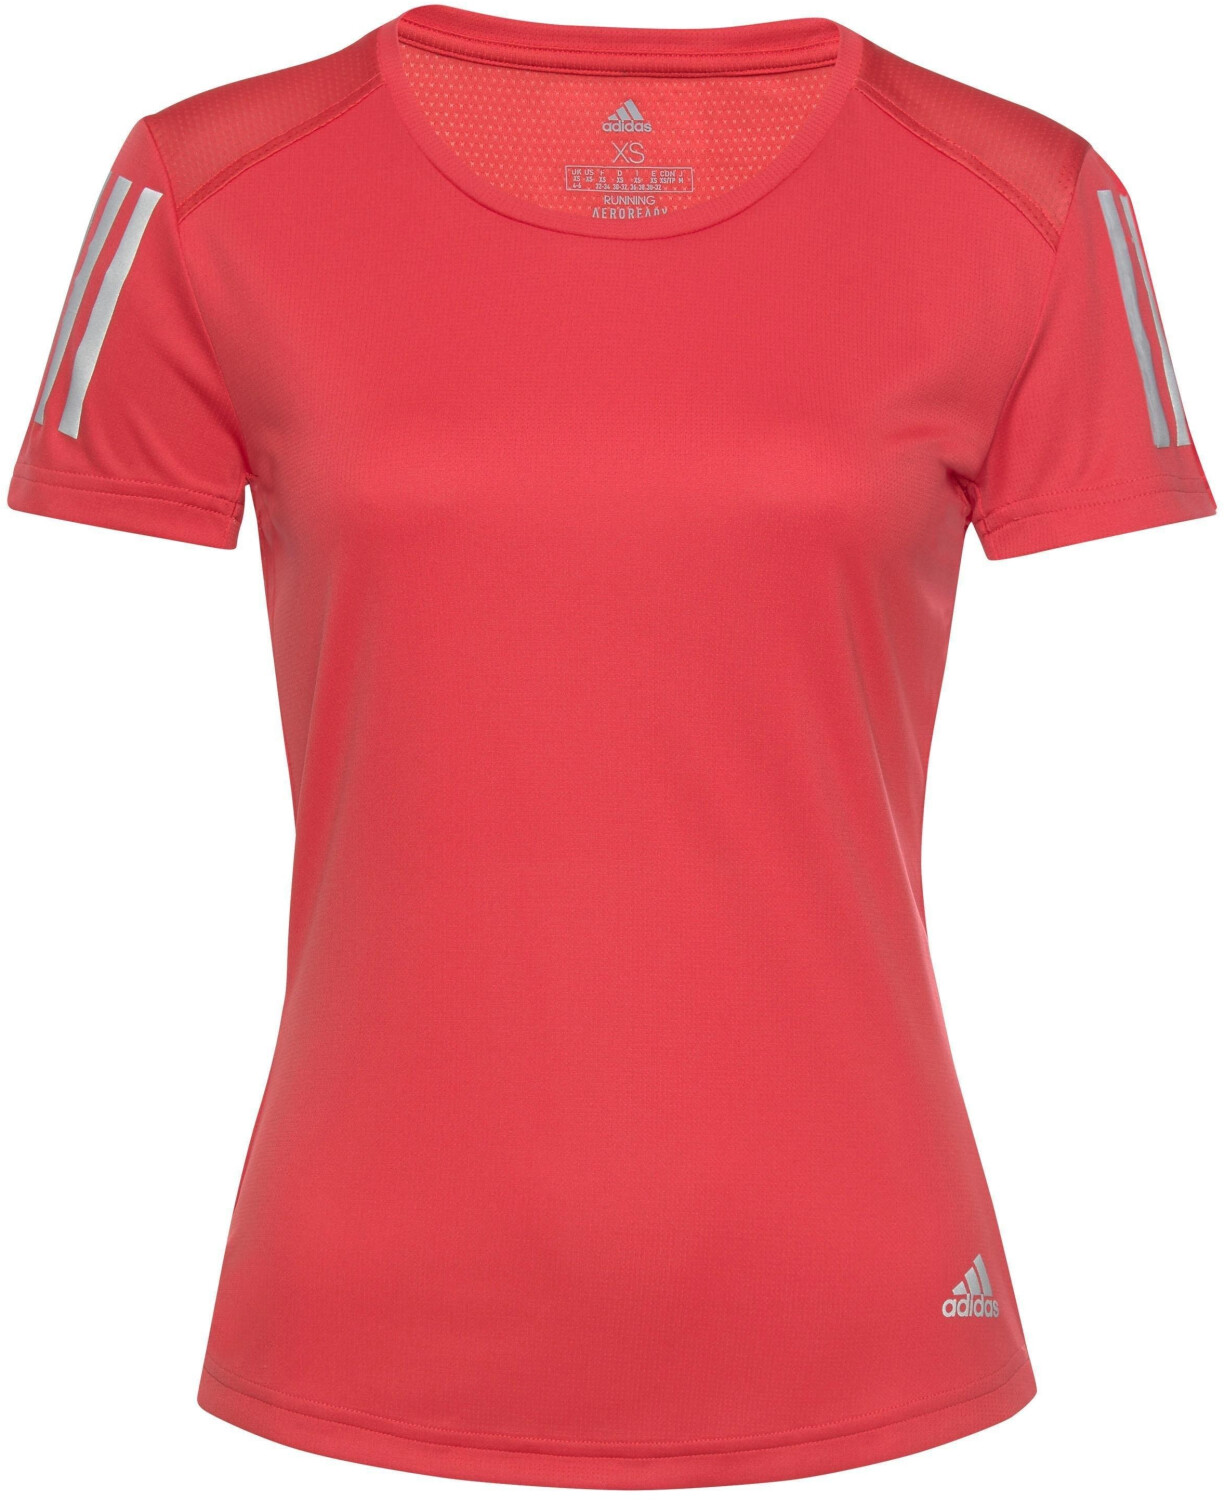 Adidas Own The Run T-Shirt Women glory red